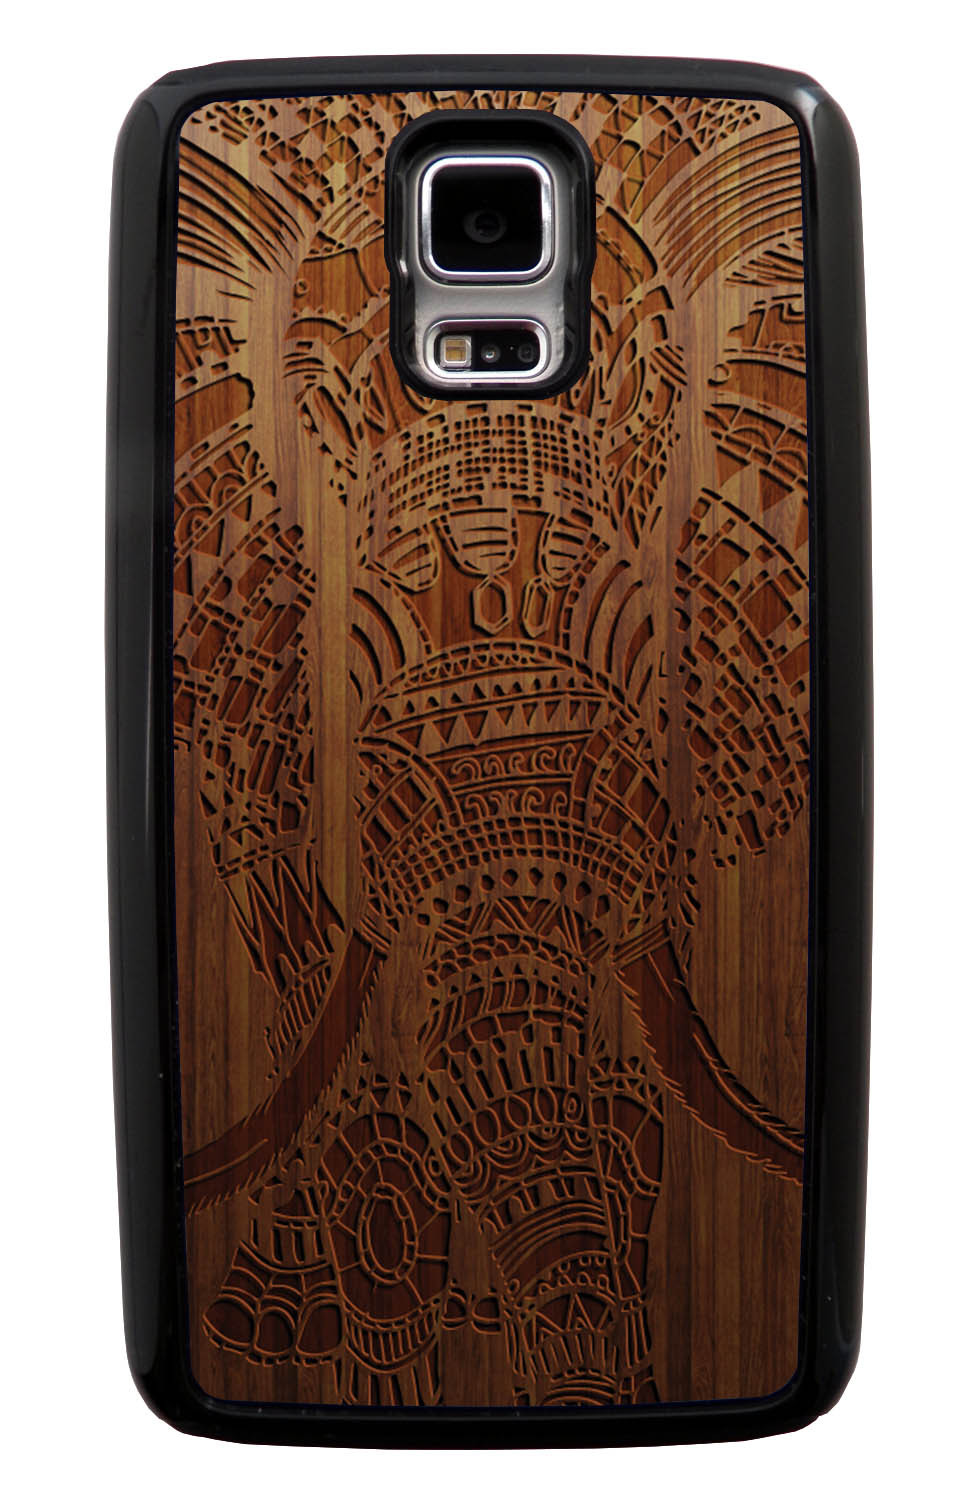 Samsung Galaxy S5 / SV Aztec Case - Simulated Oak Wood Engraving - Tribal Elephant - Black Tough Hybrid Case